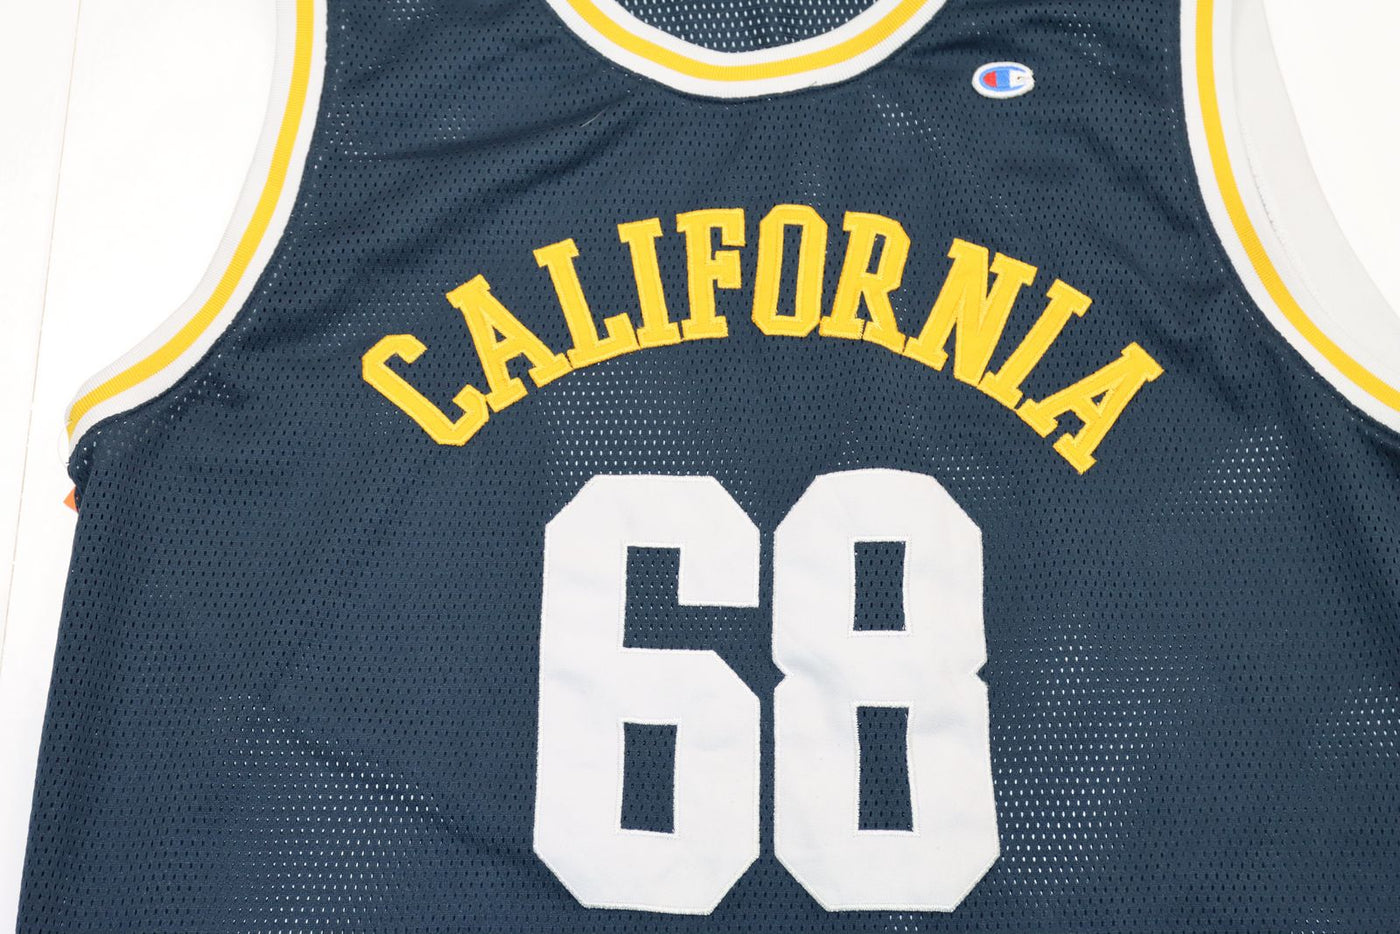 Maglia da Basket NBA Champion California 68 Blu Taglia XL